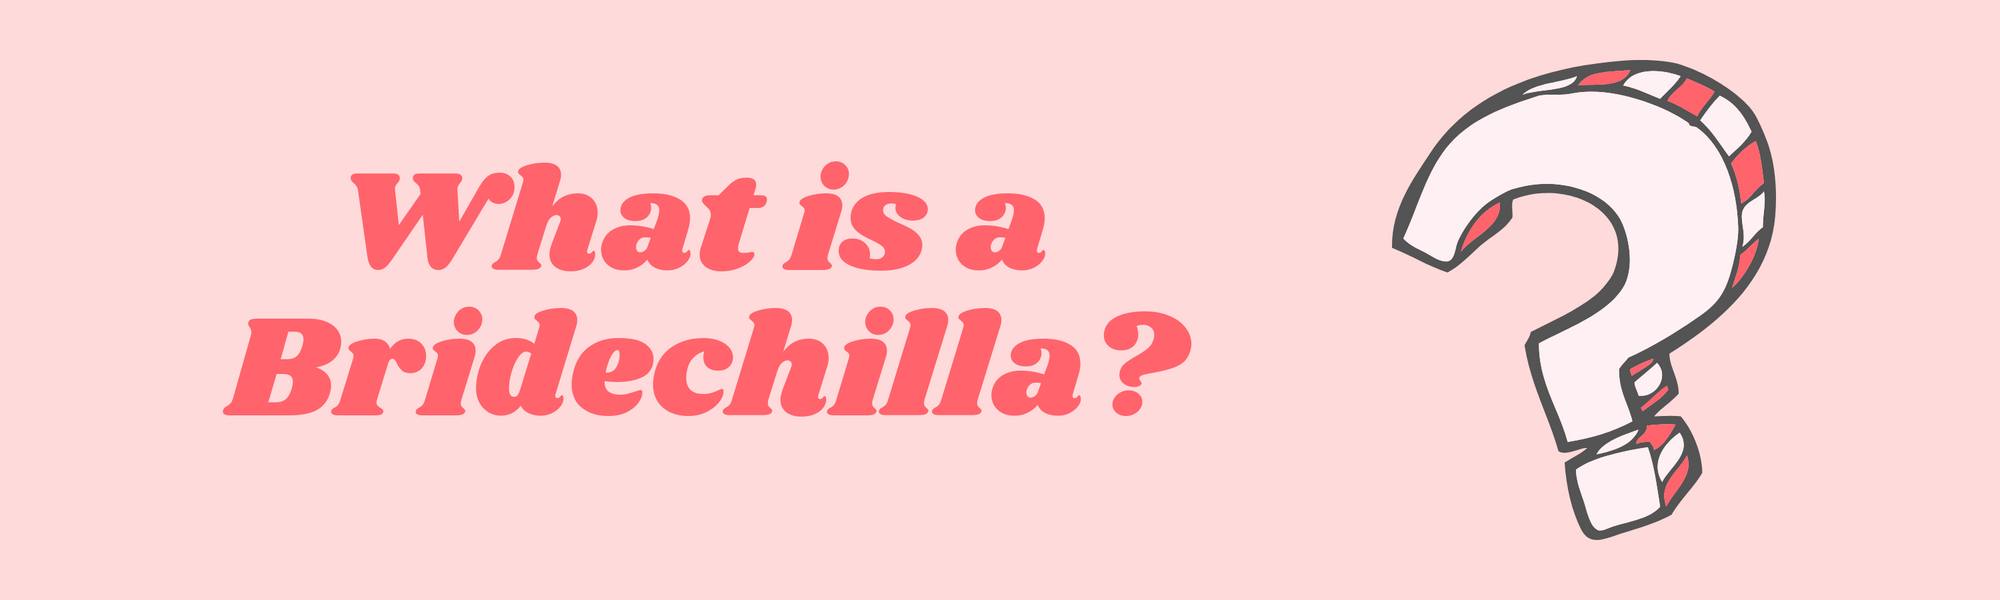 What is a Bridechilla?